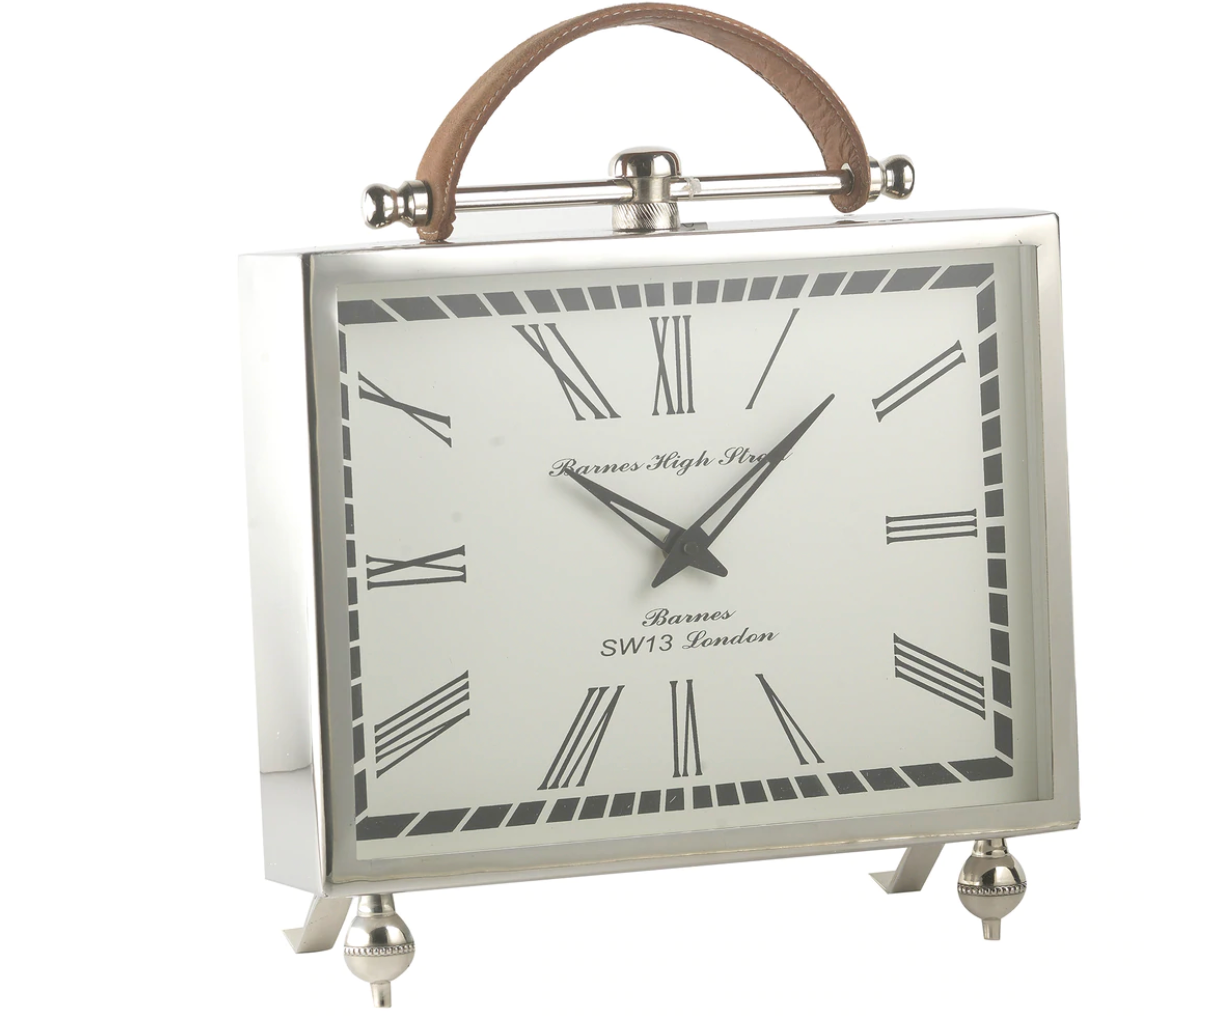 49 Bond Street London Handmade Alarm Clock